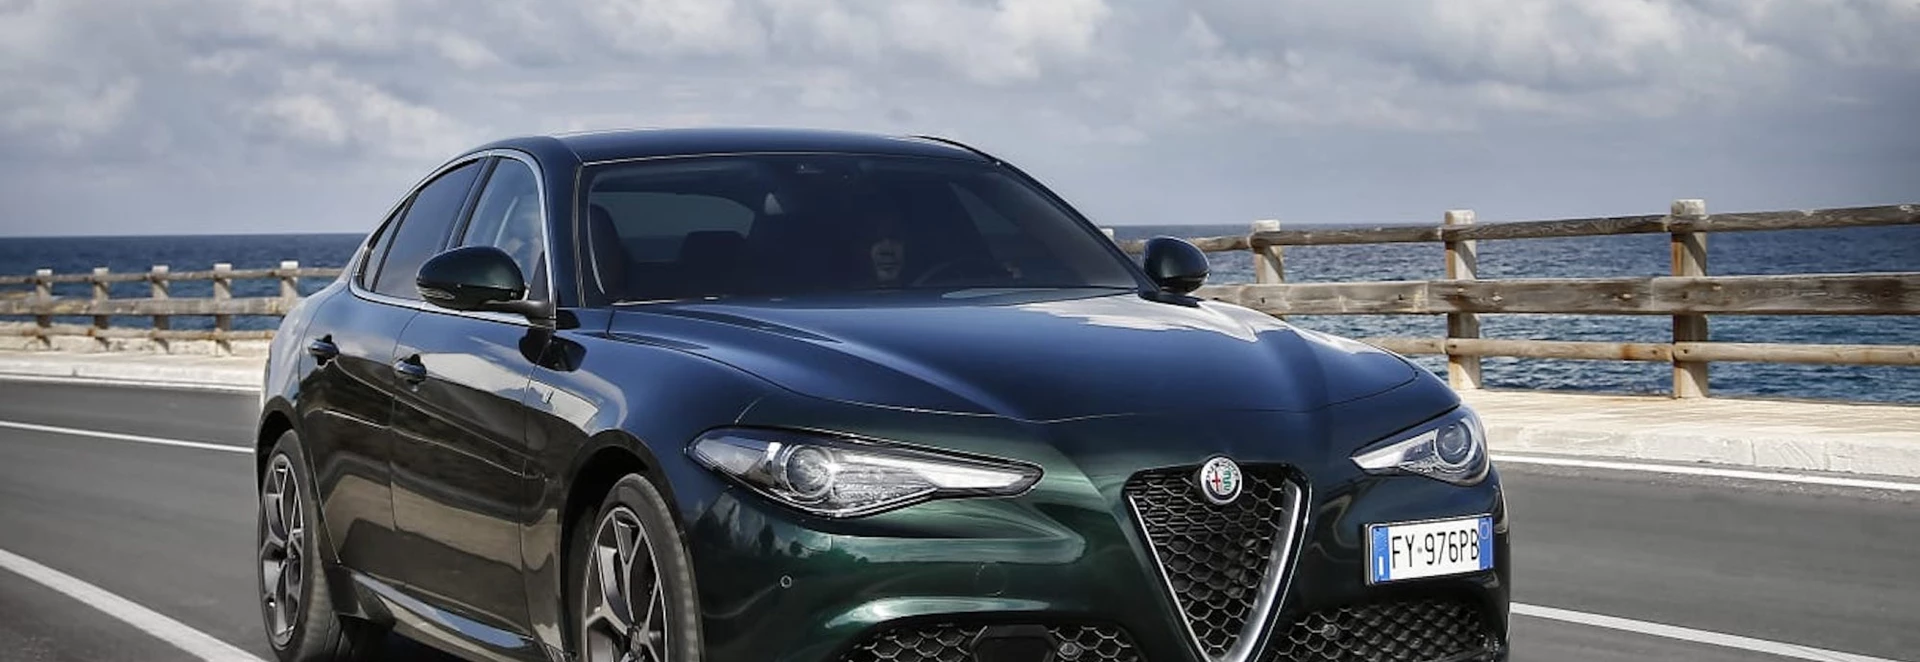 Alfa Romeo Giulia 2020 review